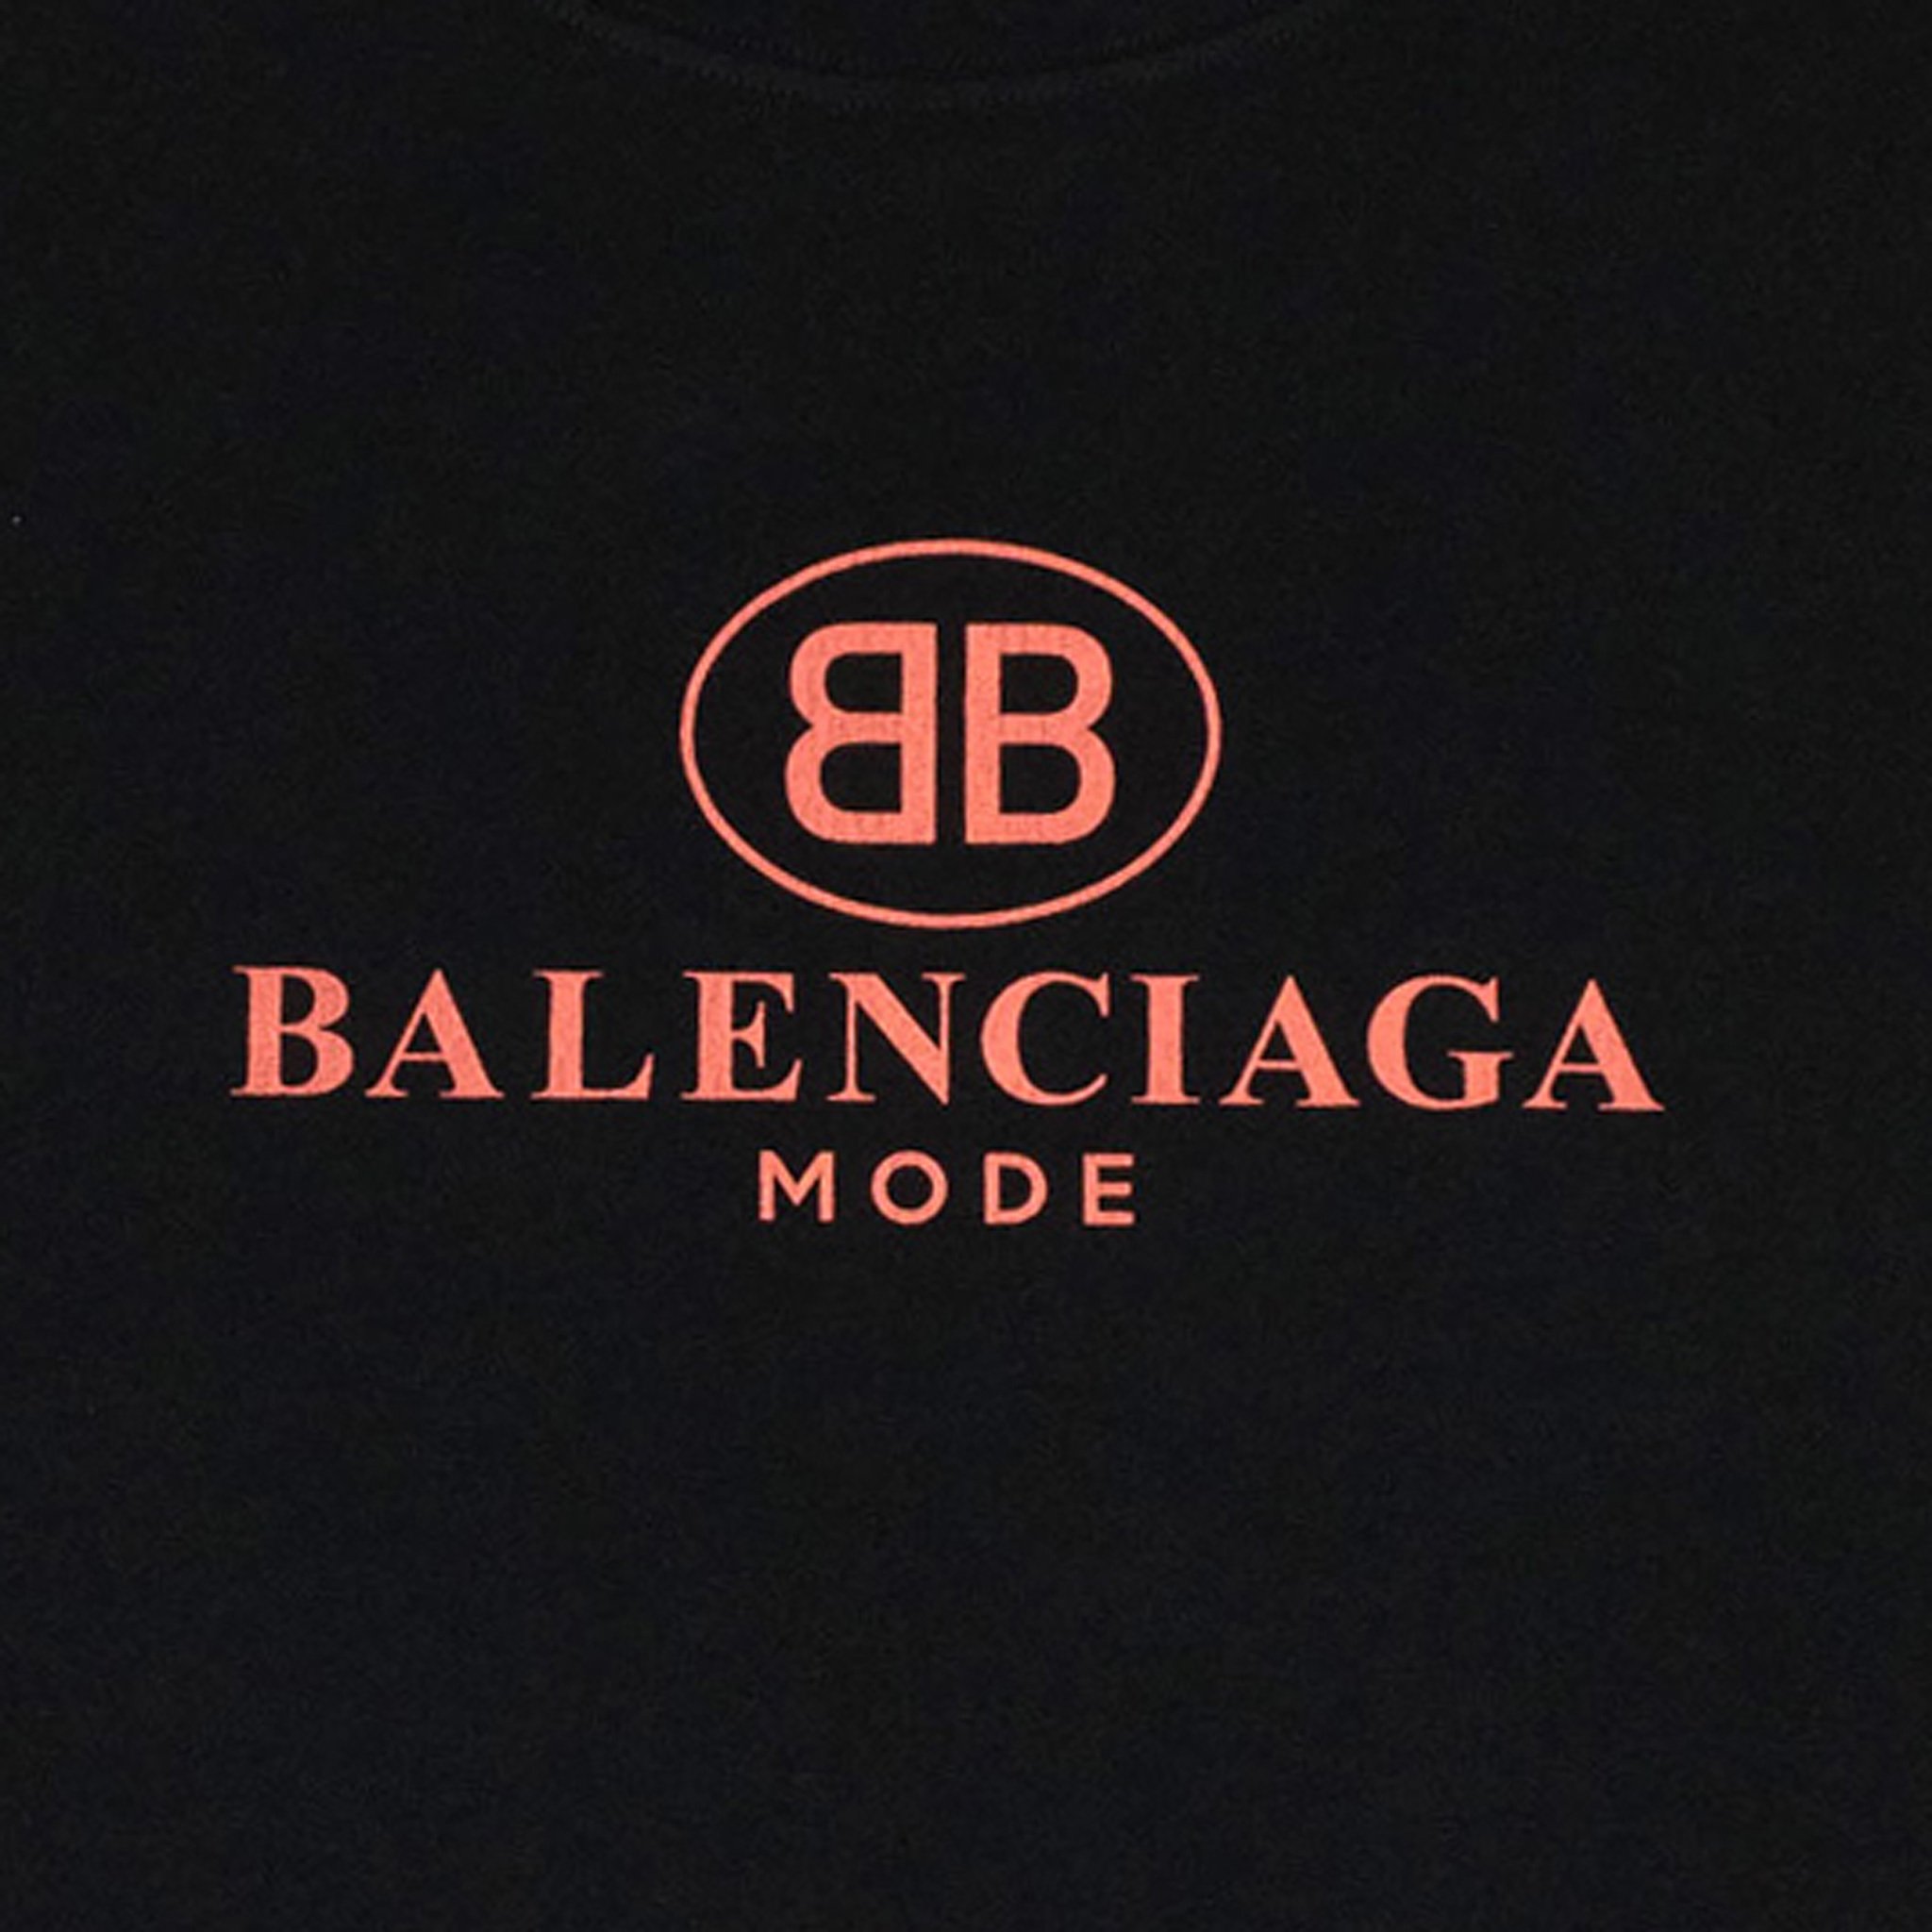 Balenciaga BB Mode T Shirt Black Pink.